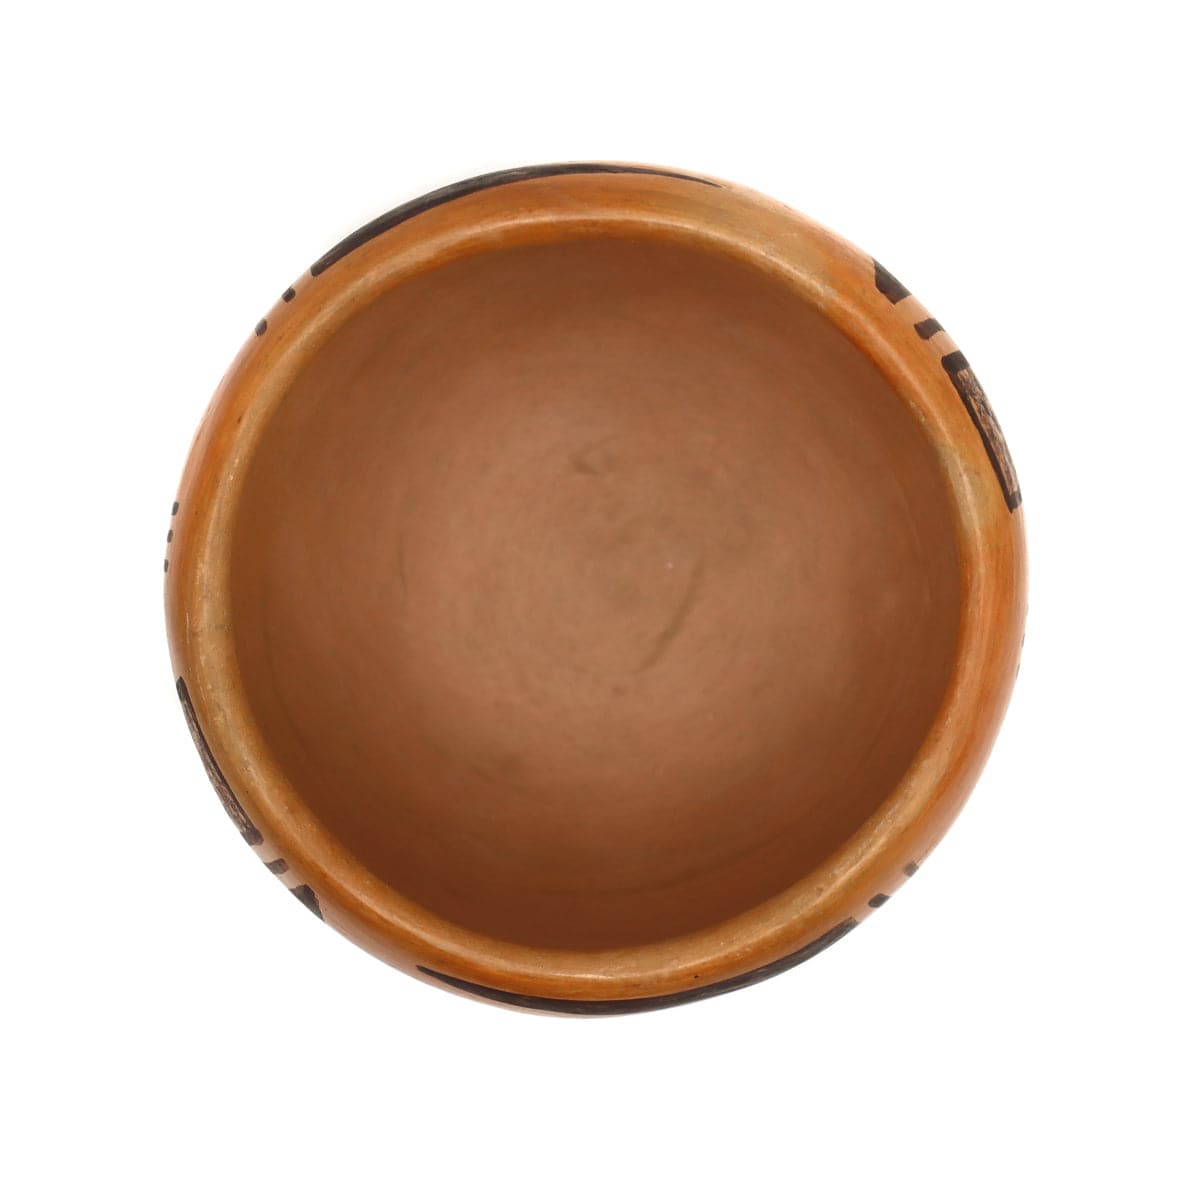 Hopi Bowl c. 1970s, 2.75" x 4.25" (P3329) 4
